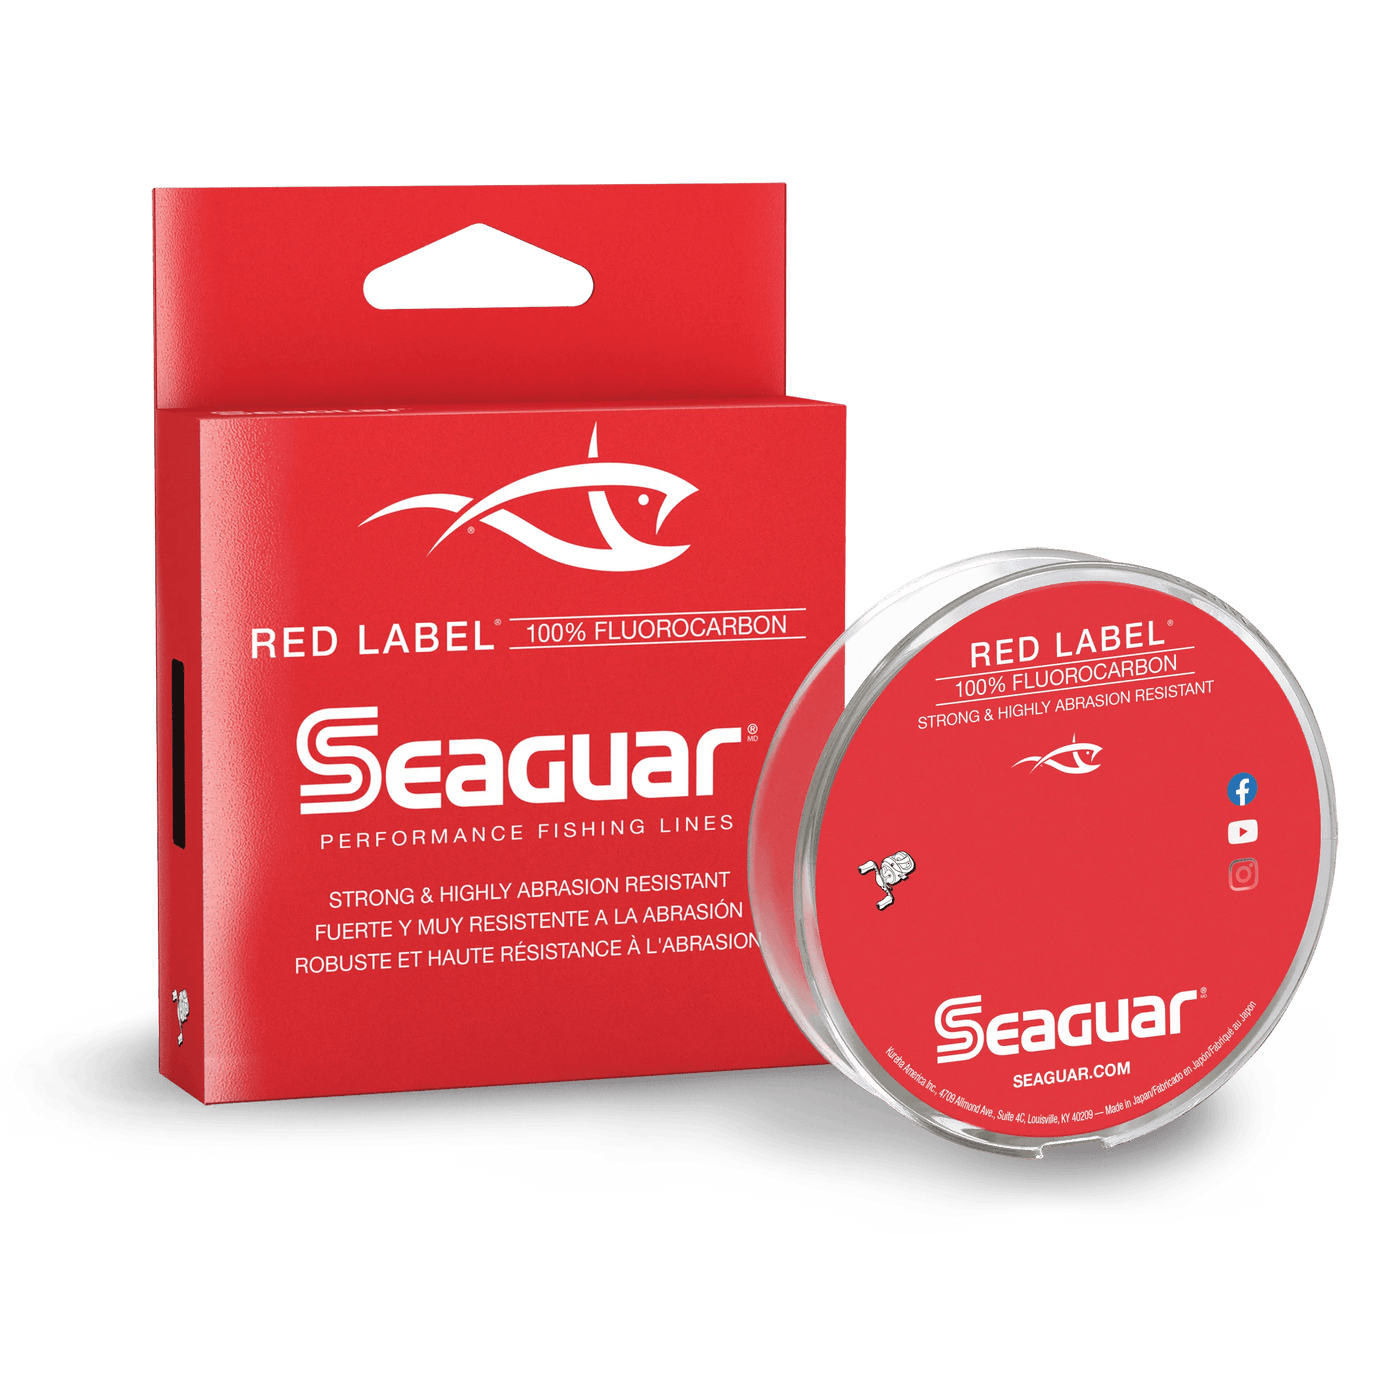 Seaguar - Red Label Fluorocarbon Fishing Line Fishing Line Seaguar 